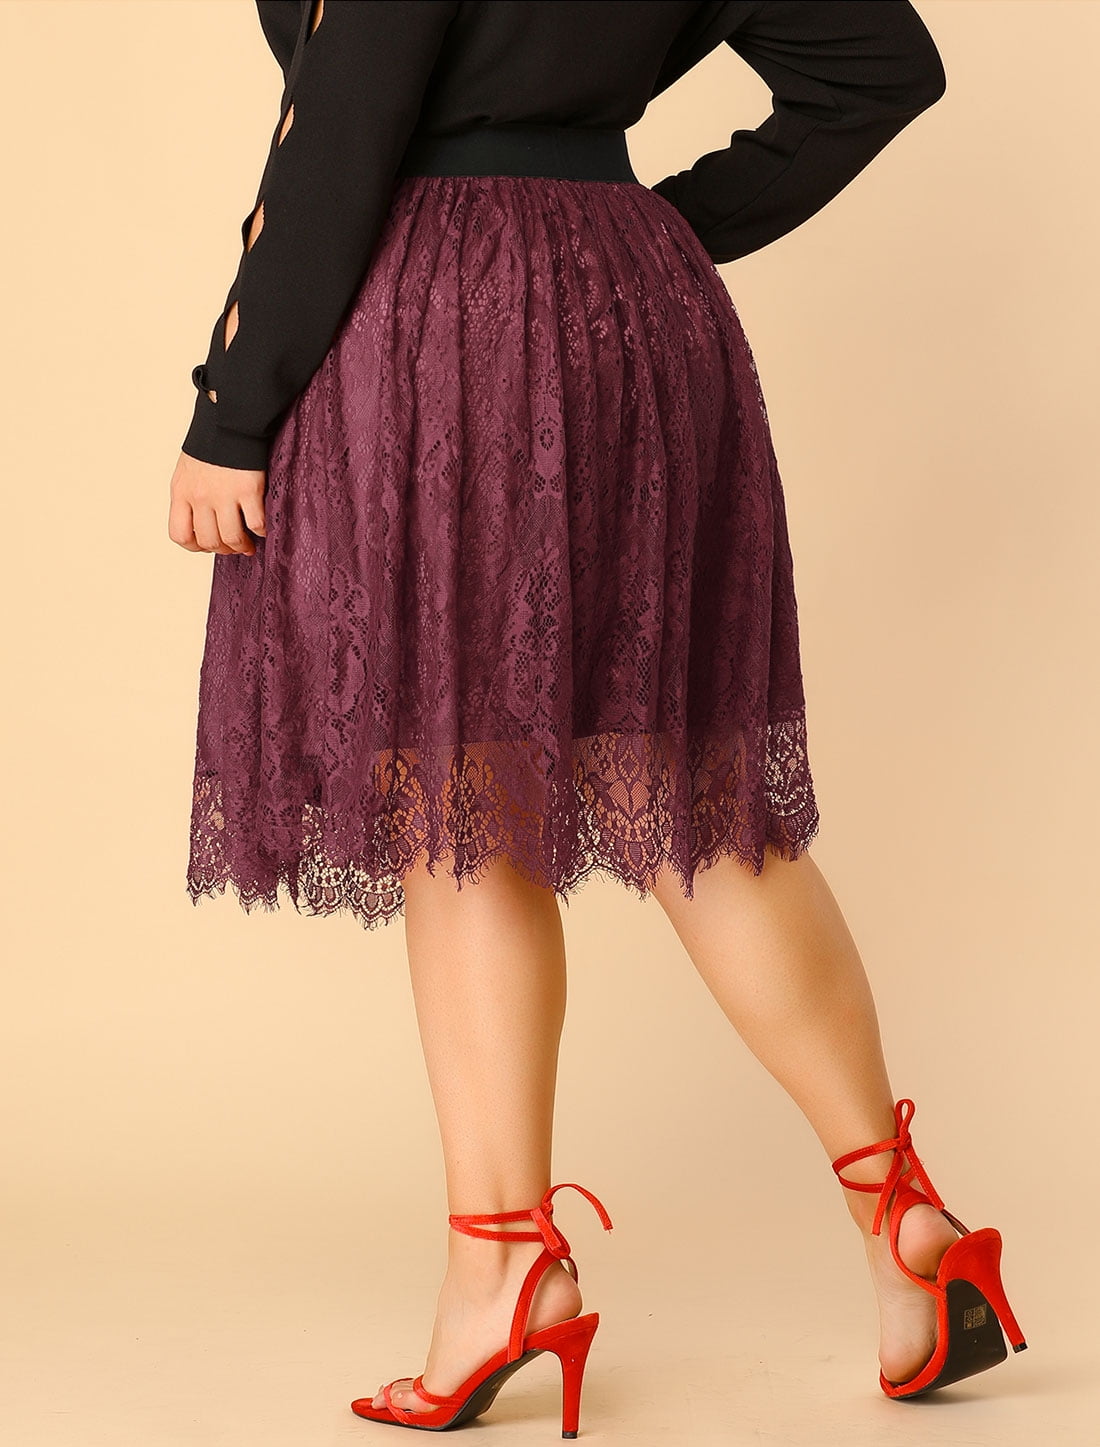 Agnes Orinda Womens Plus Size Knee Length High Waist A-line Flare Lace Skirt